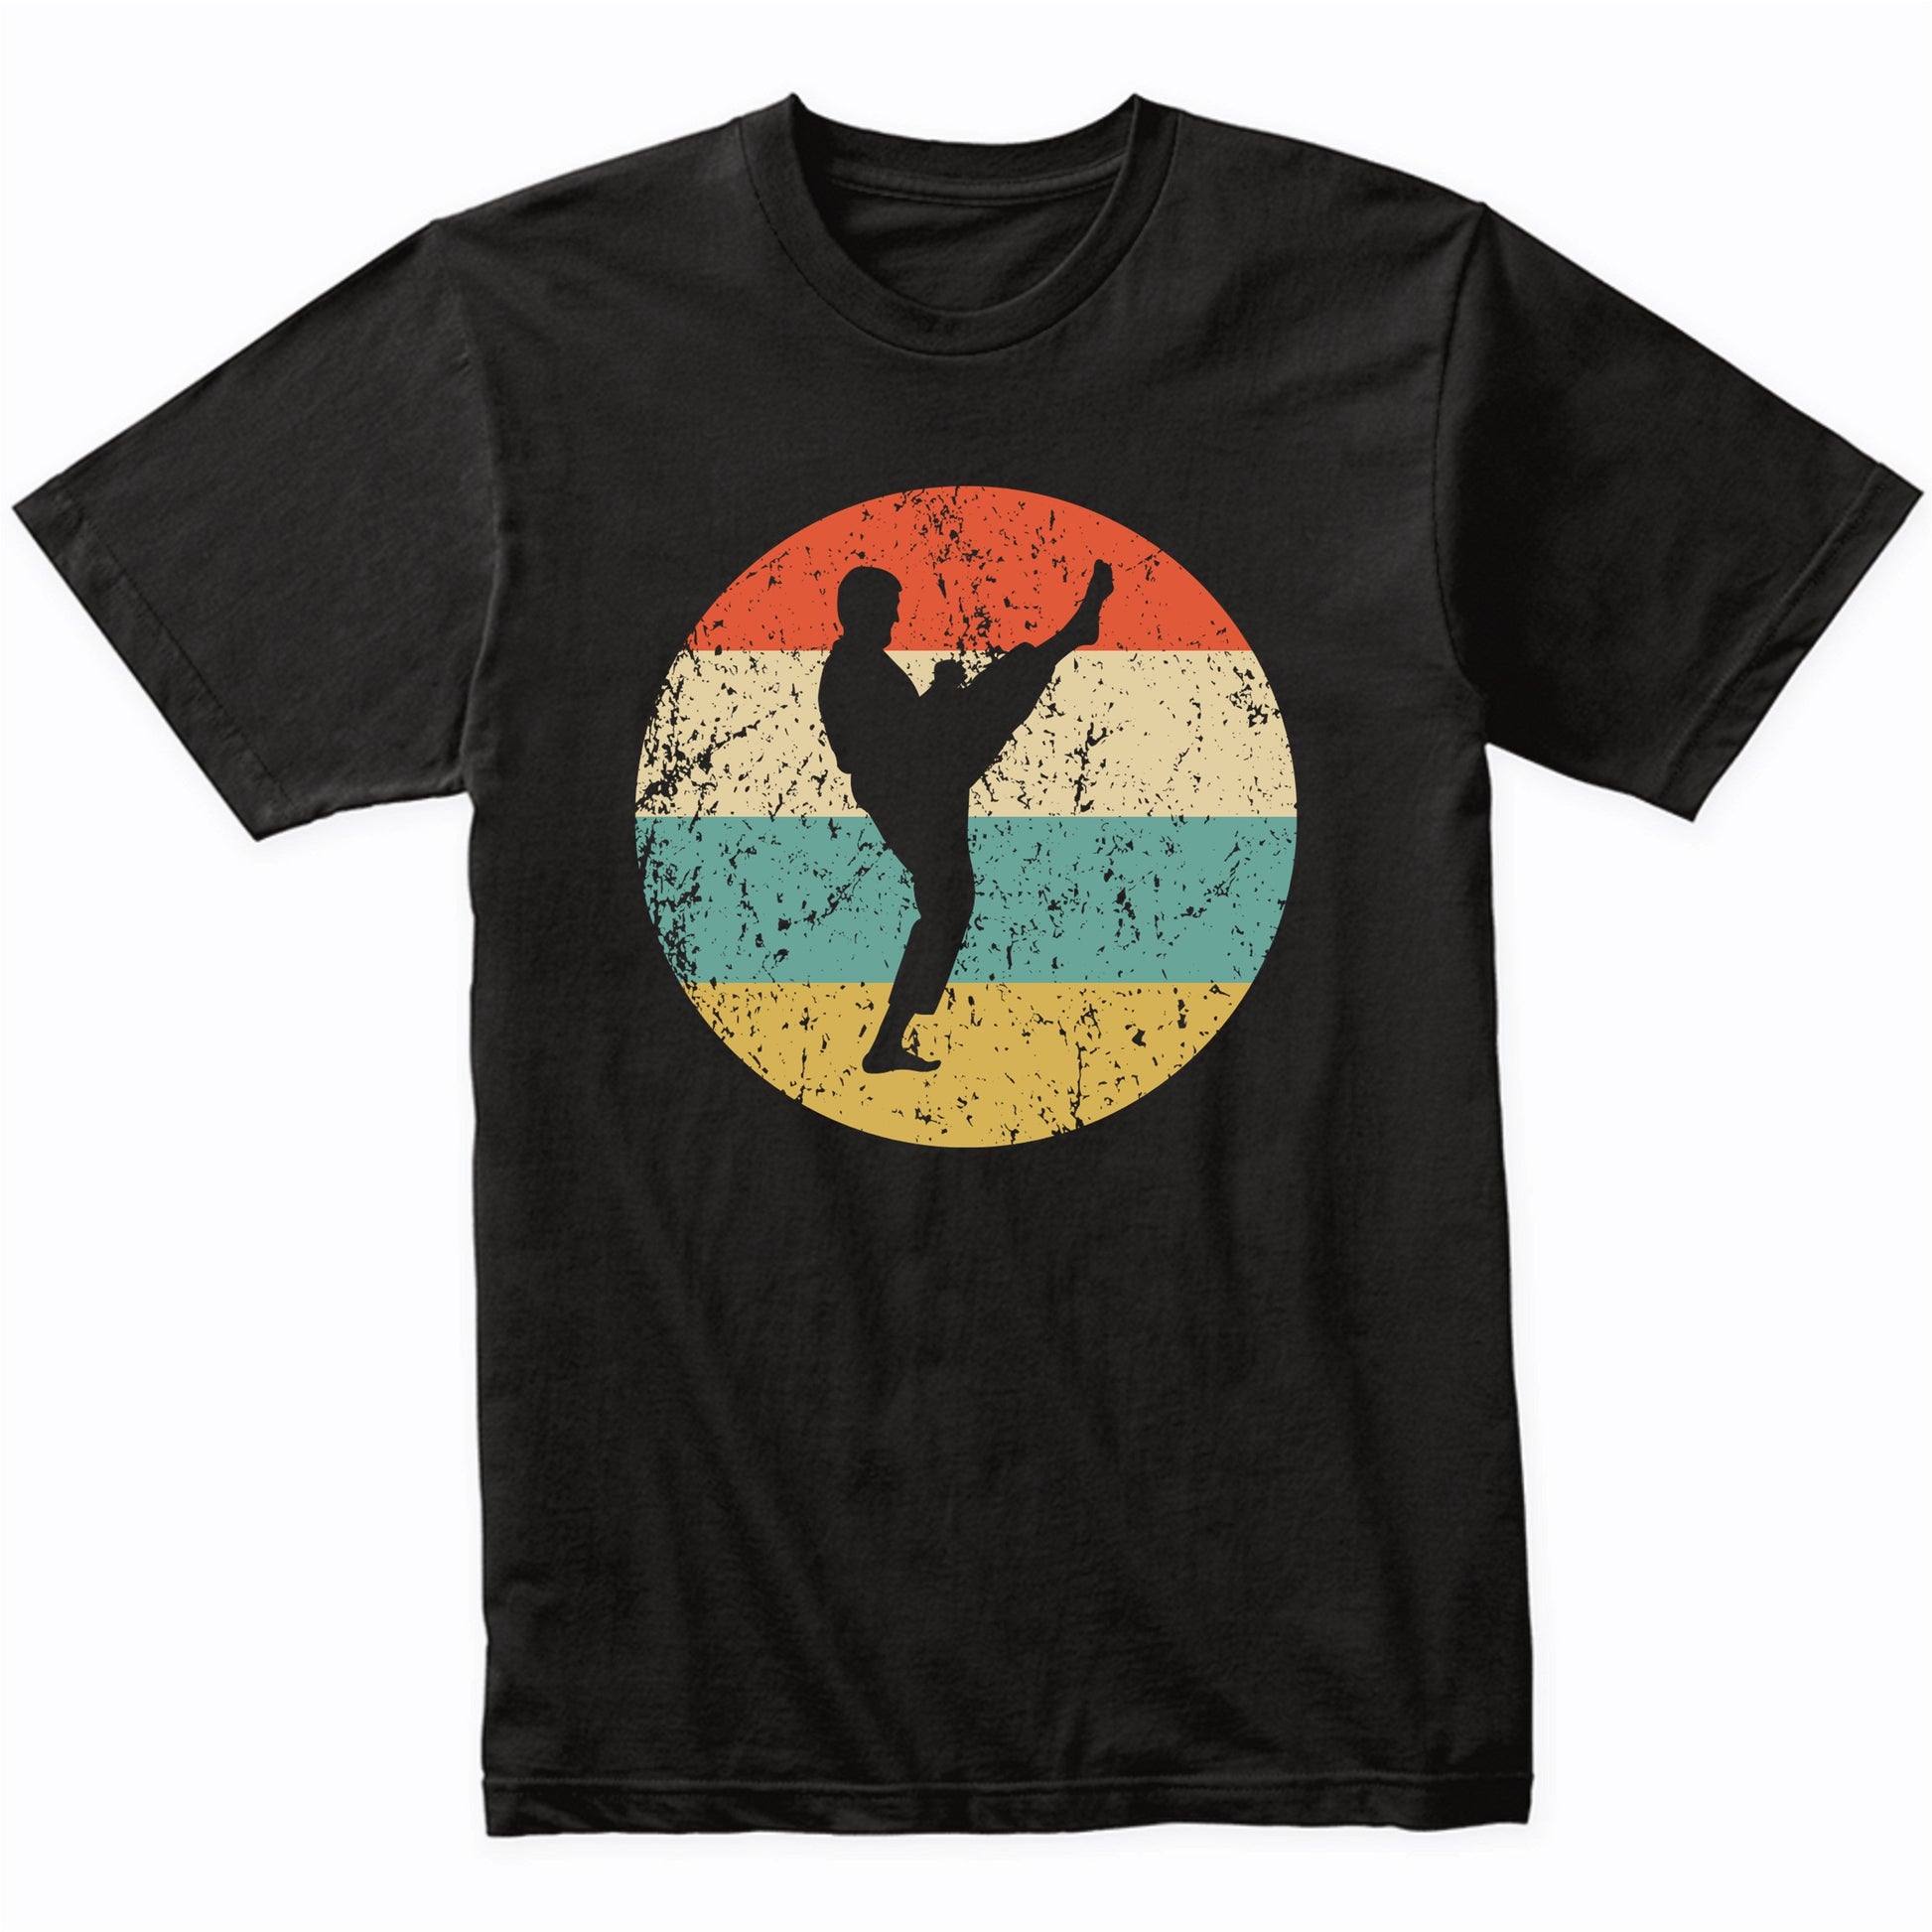 Karate Shirt - Vintage Retro Martial Arts T-Shirt